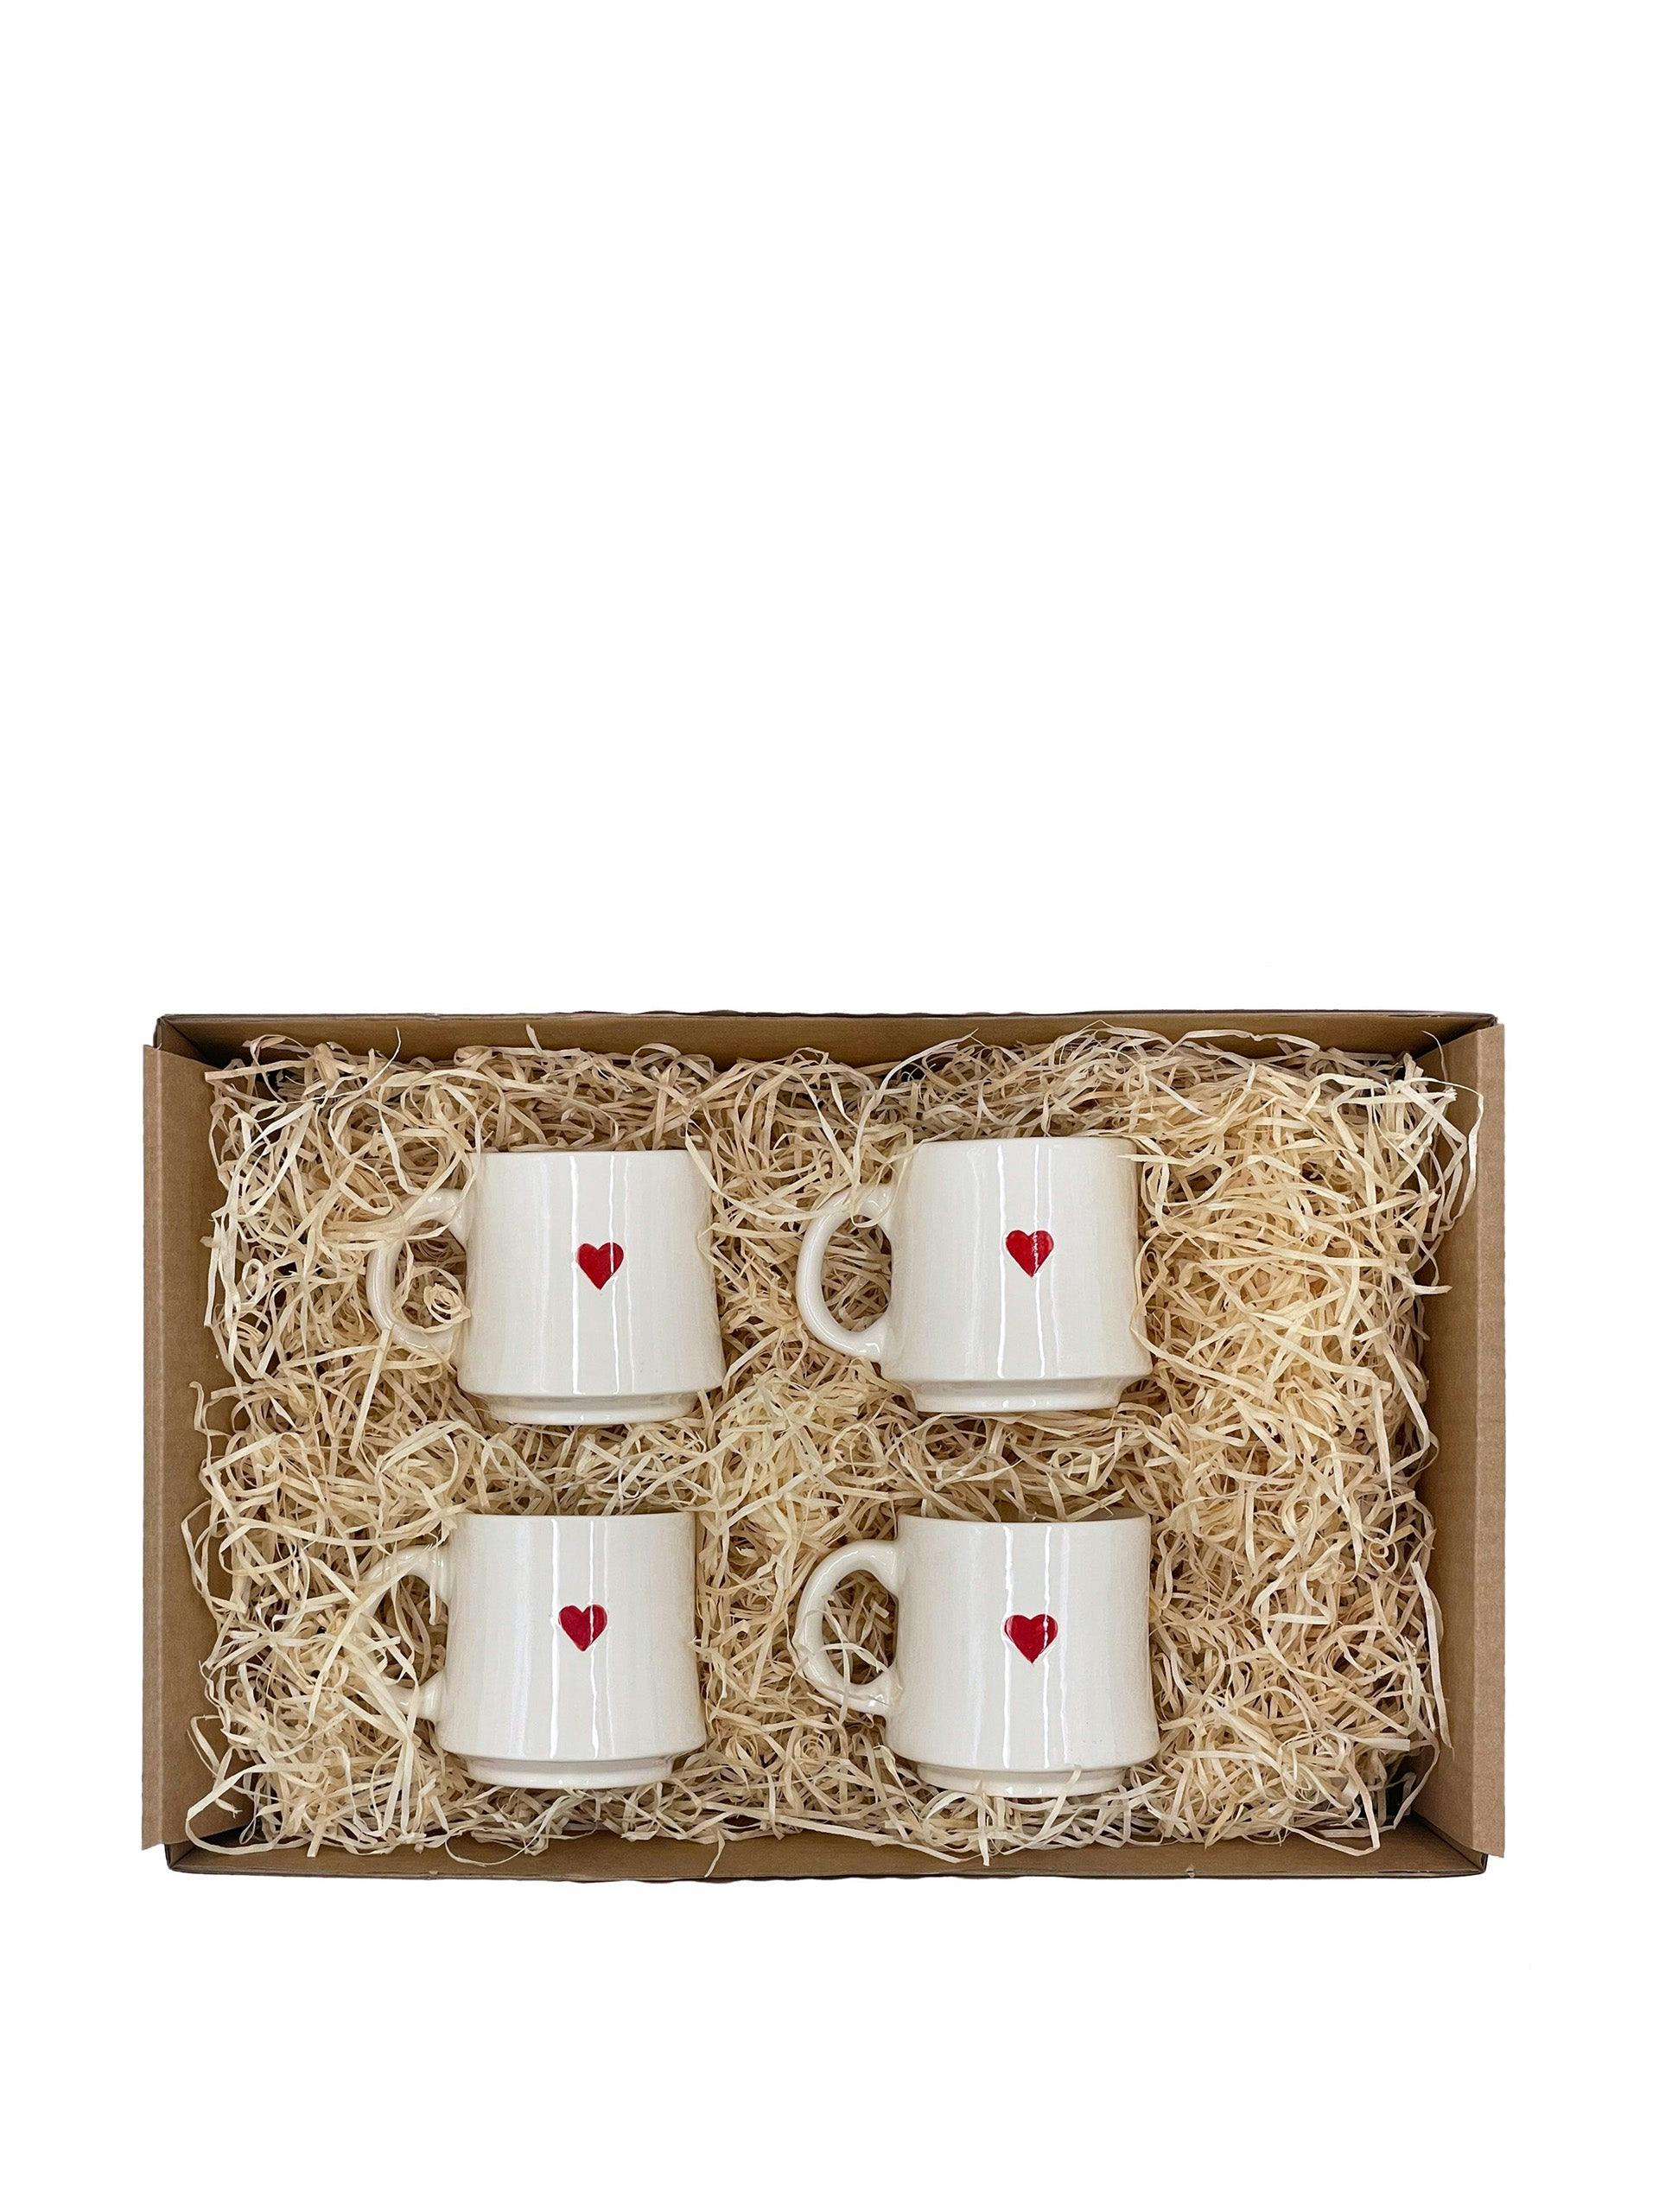 Small love heart mugs (set of 4)